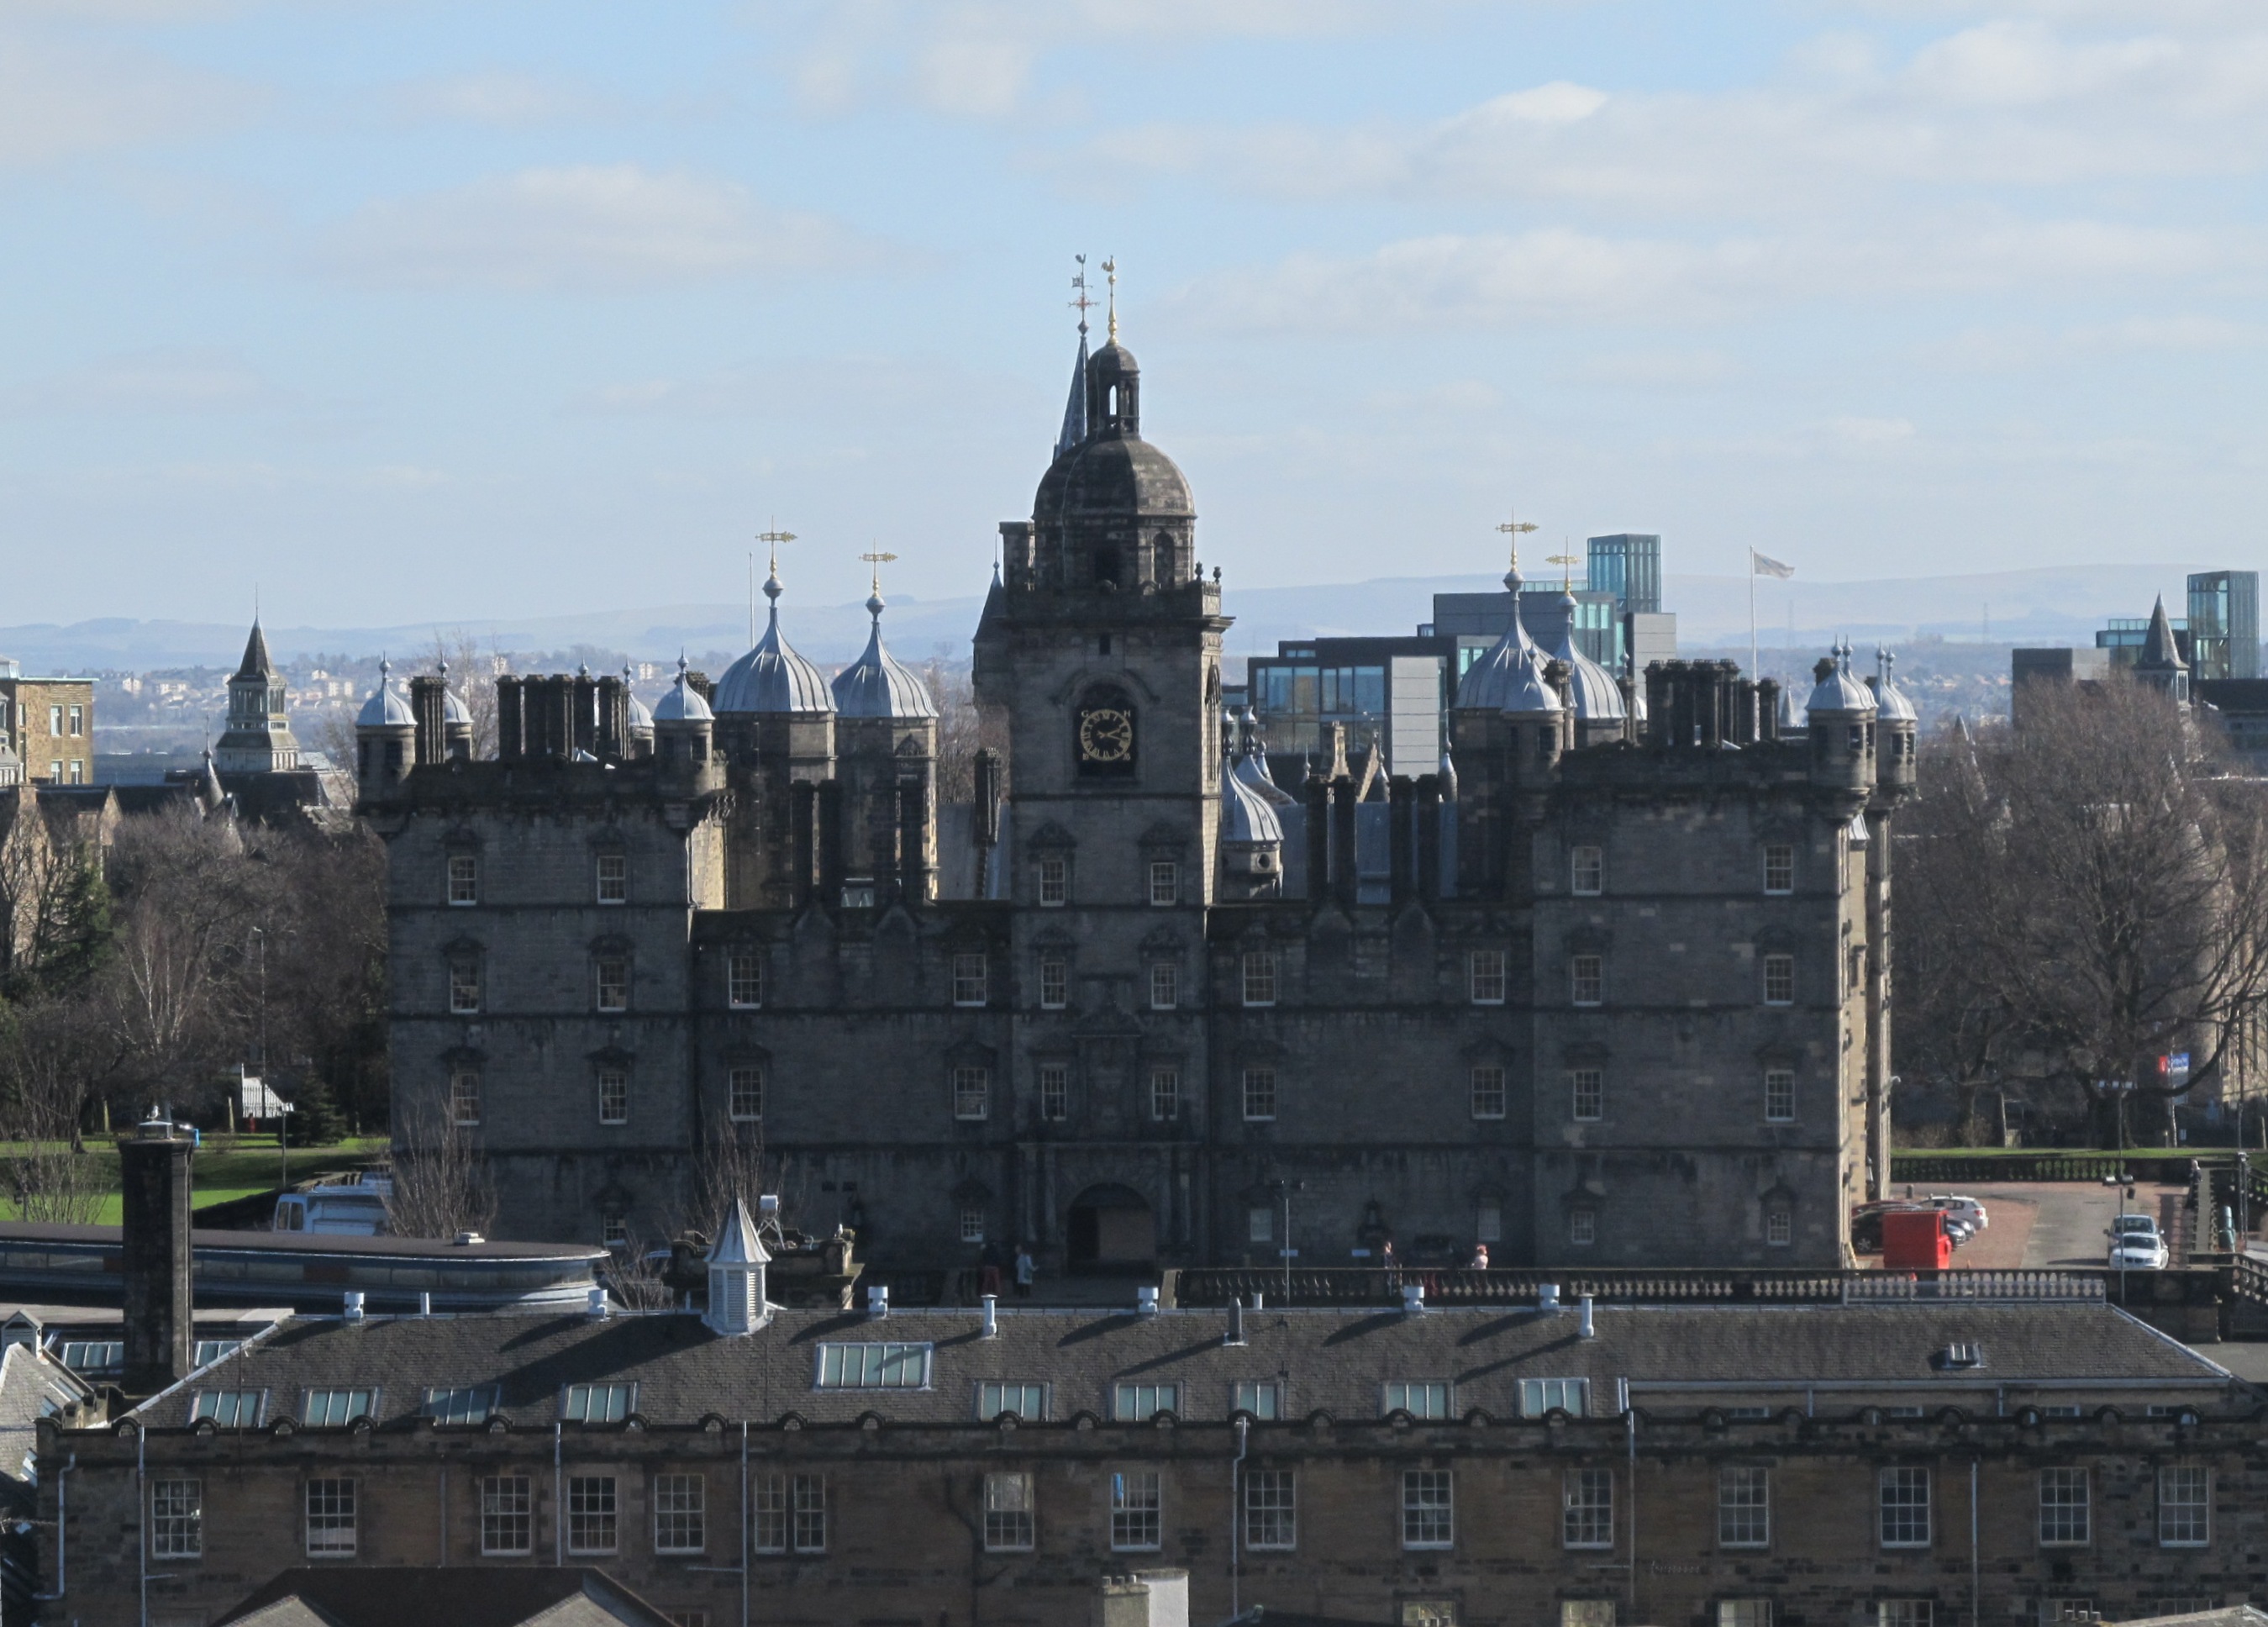 Edinburgh - George Heriot's School seen from the castle